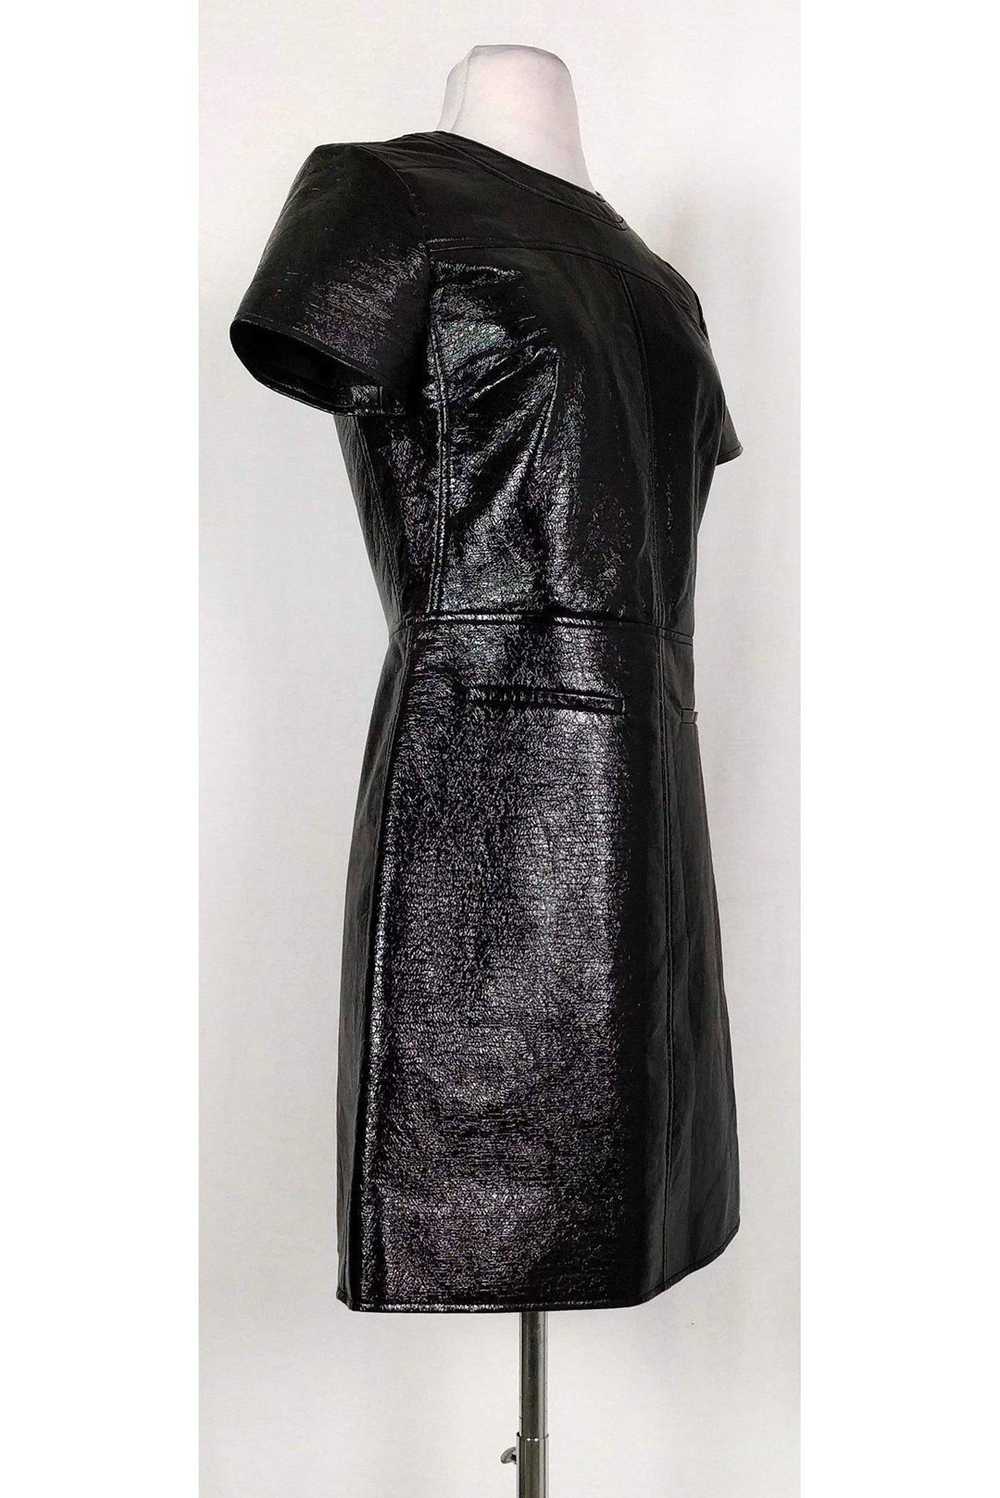 Michael Kors - Black Vinyl Sheath Dress Sz 2 - image 2